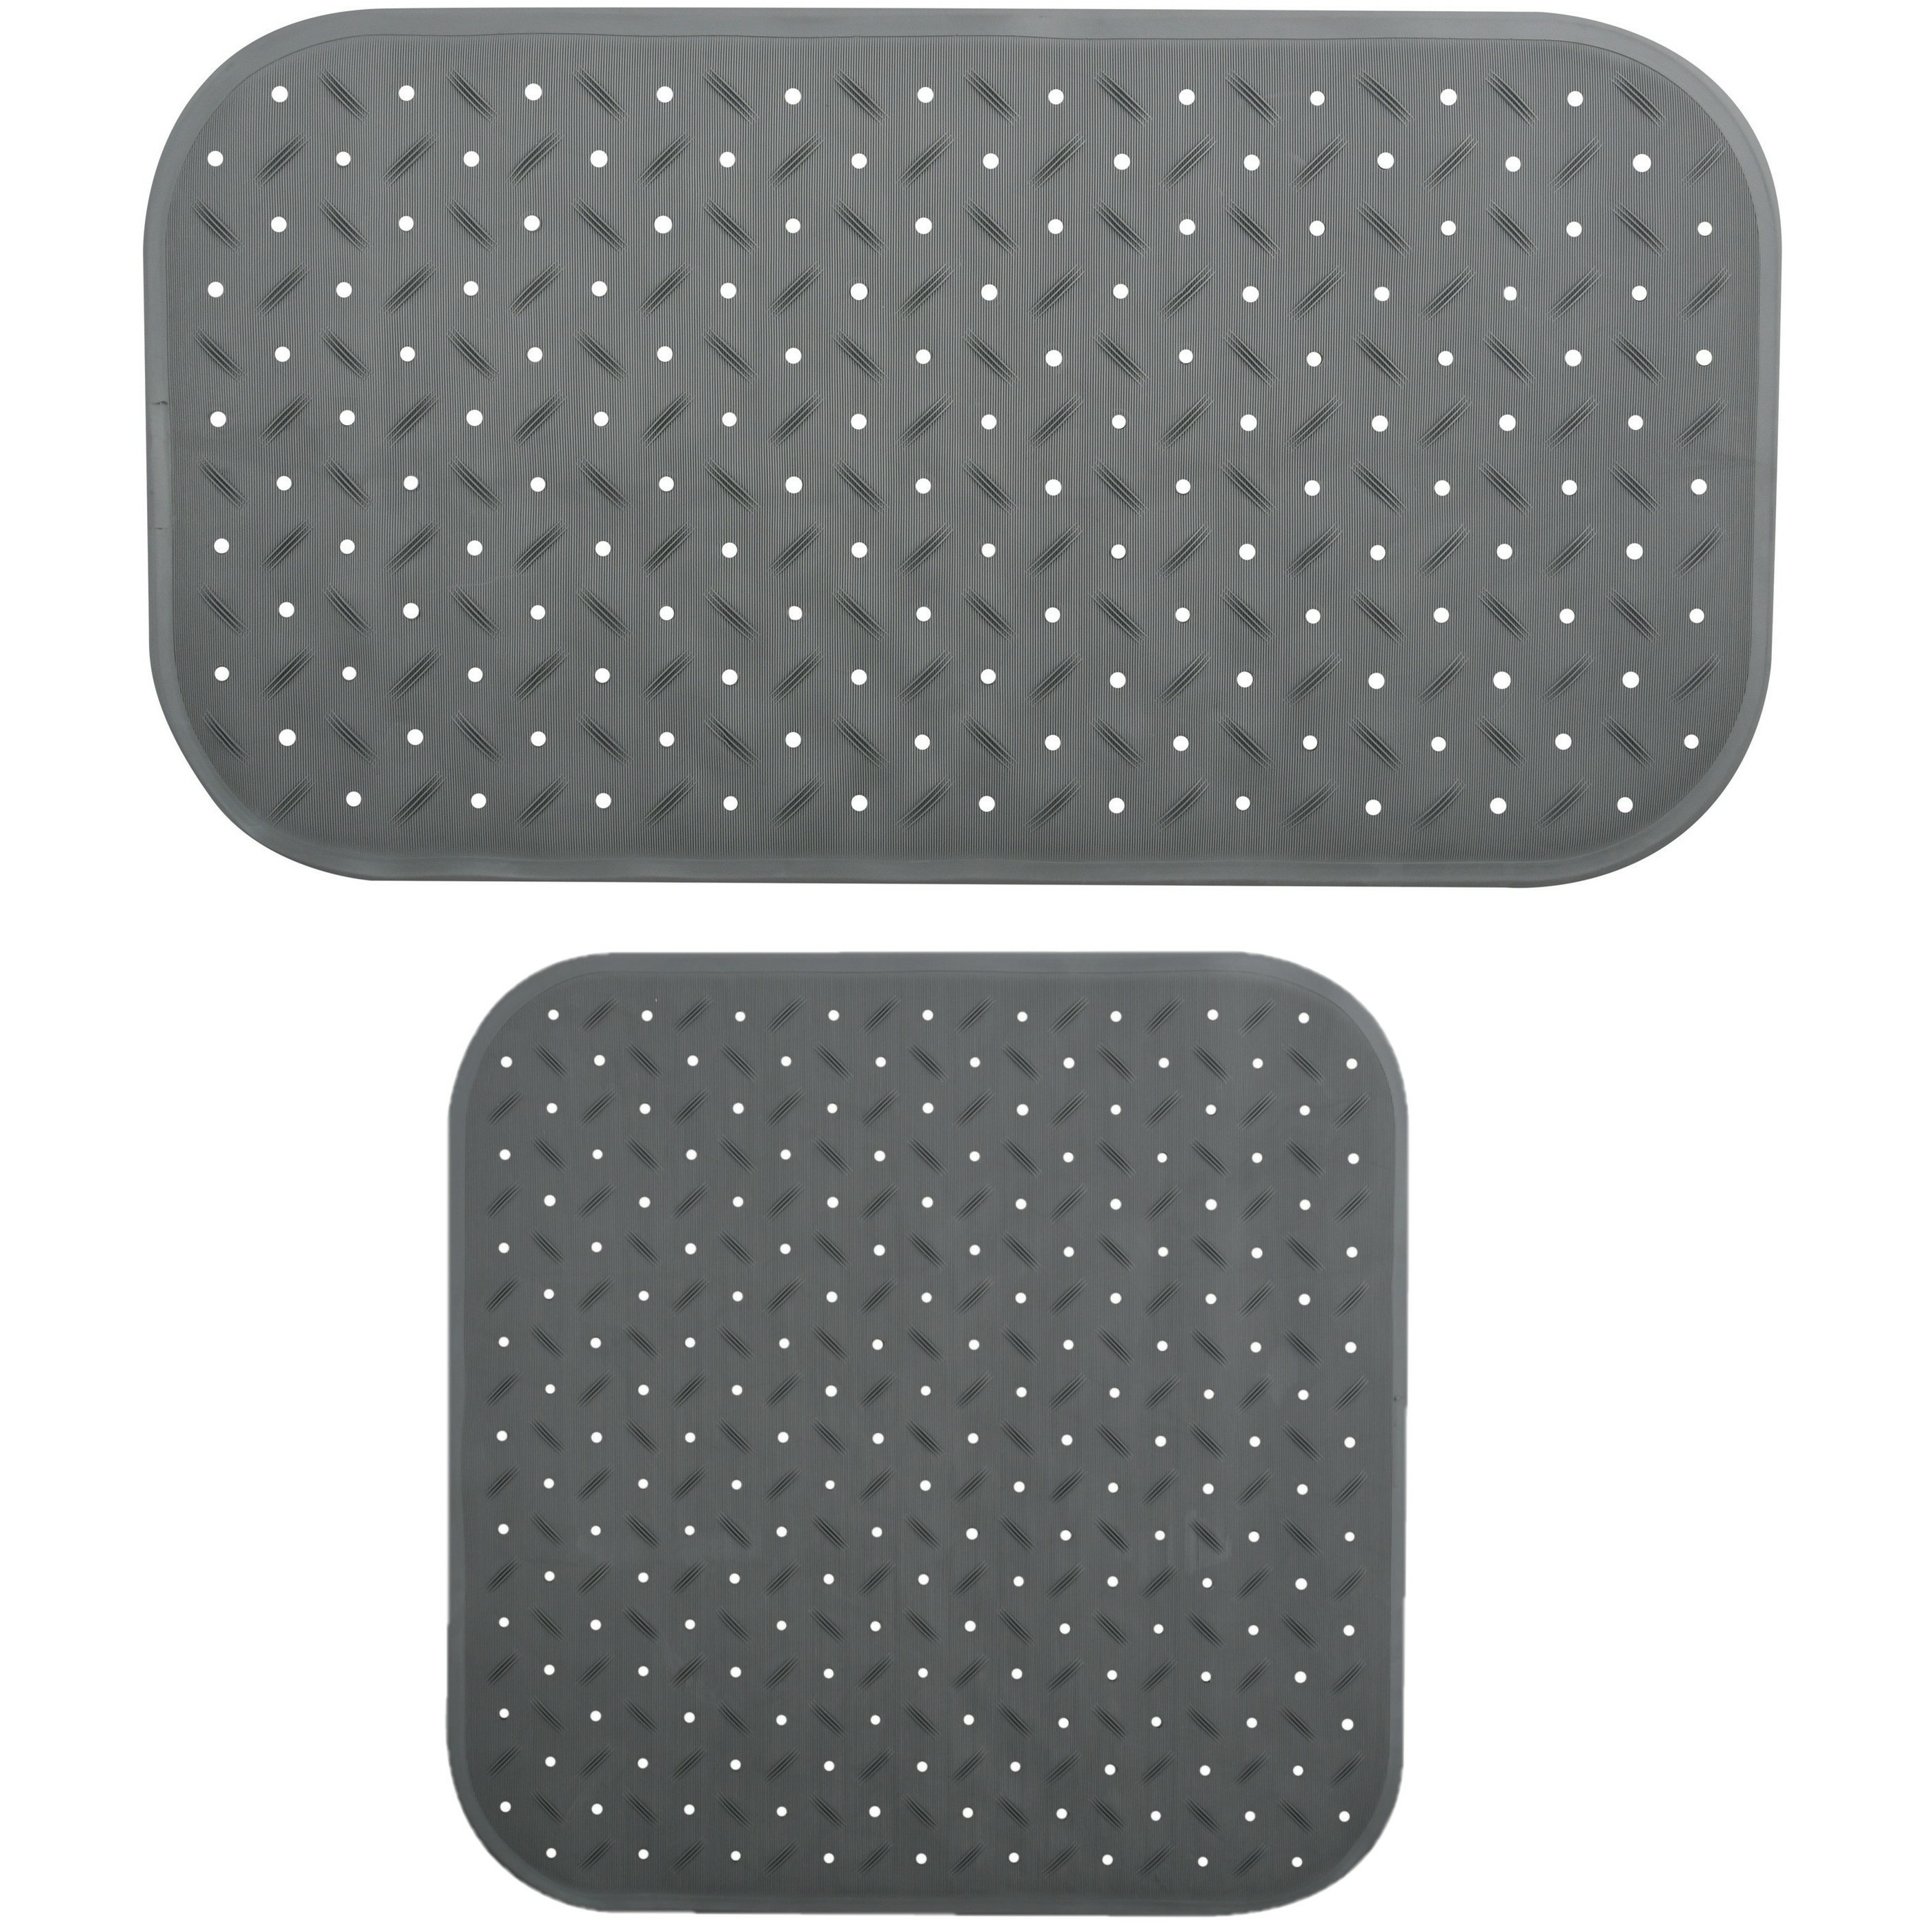 MSV Douche-bad anti-slip matten set badkamer rubber 2x stuks donkergrijs 2 formaten